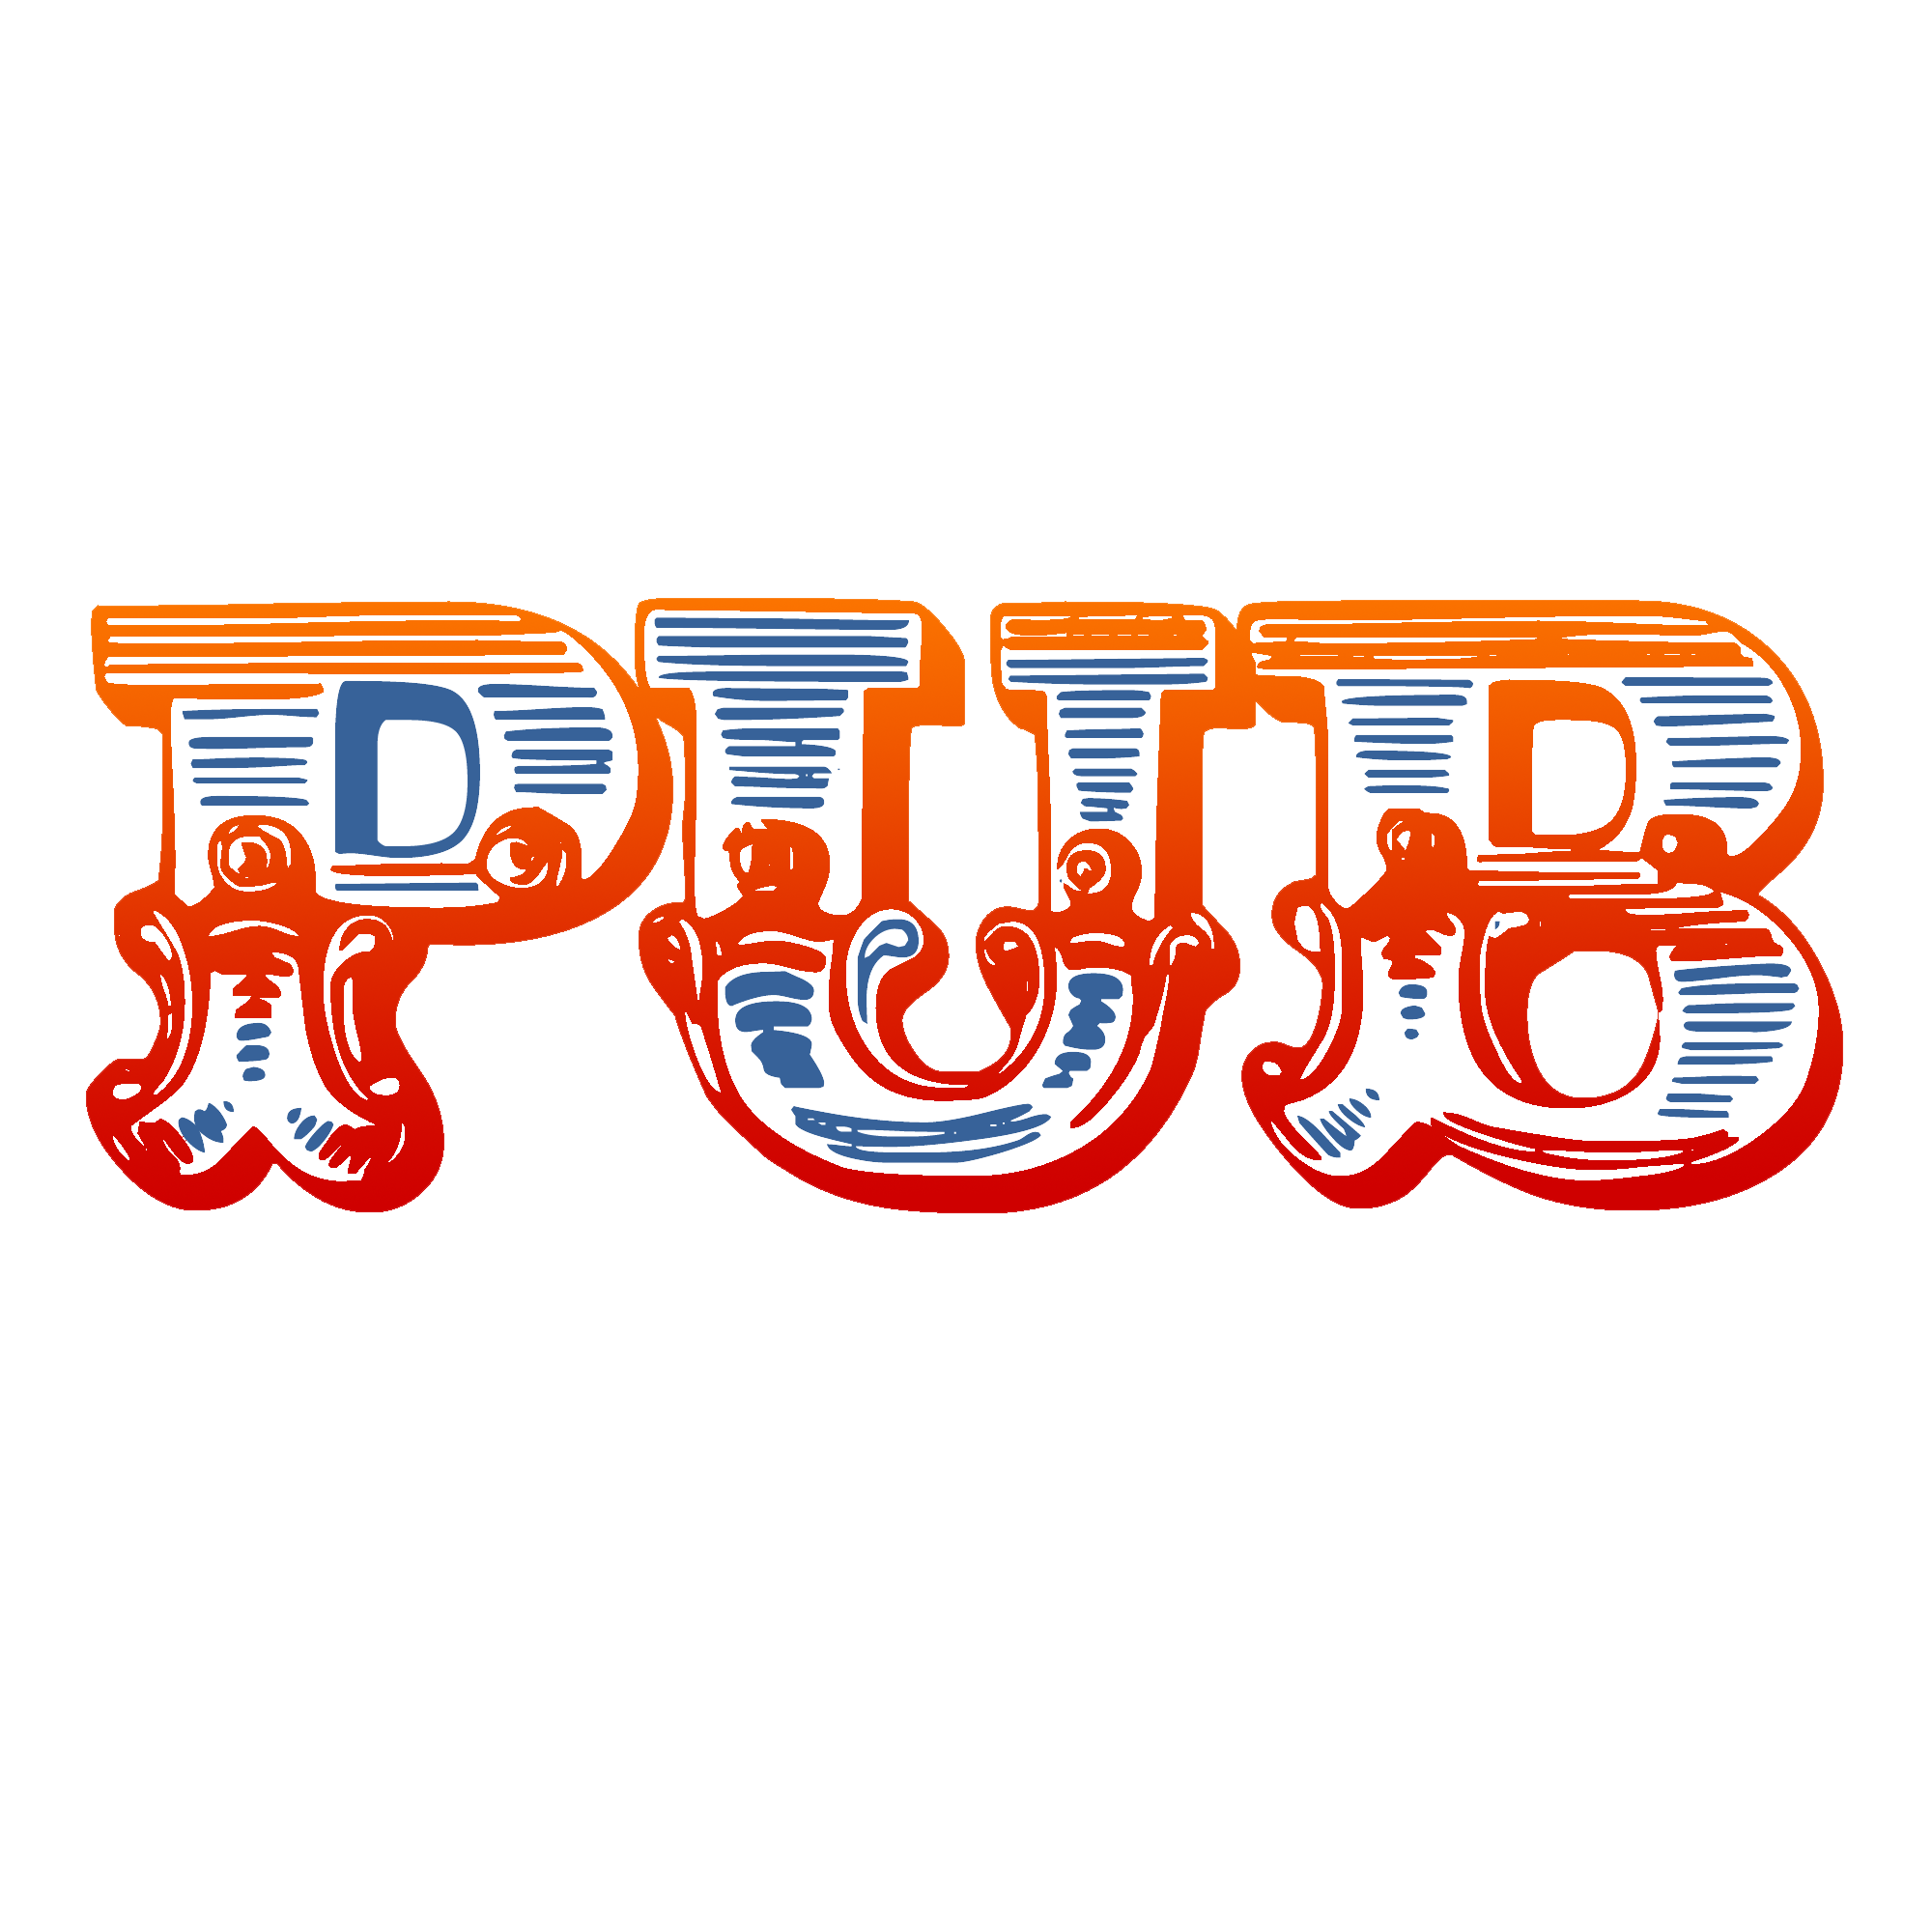 The Pub Logo